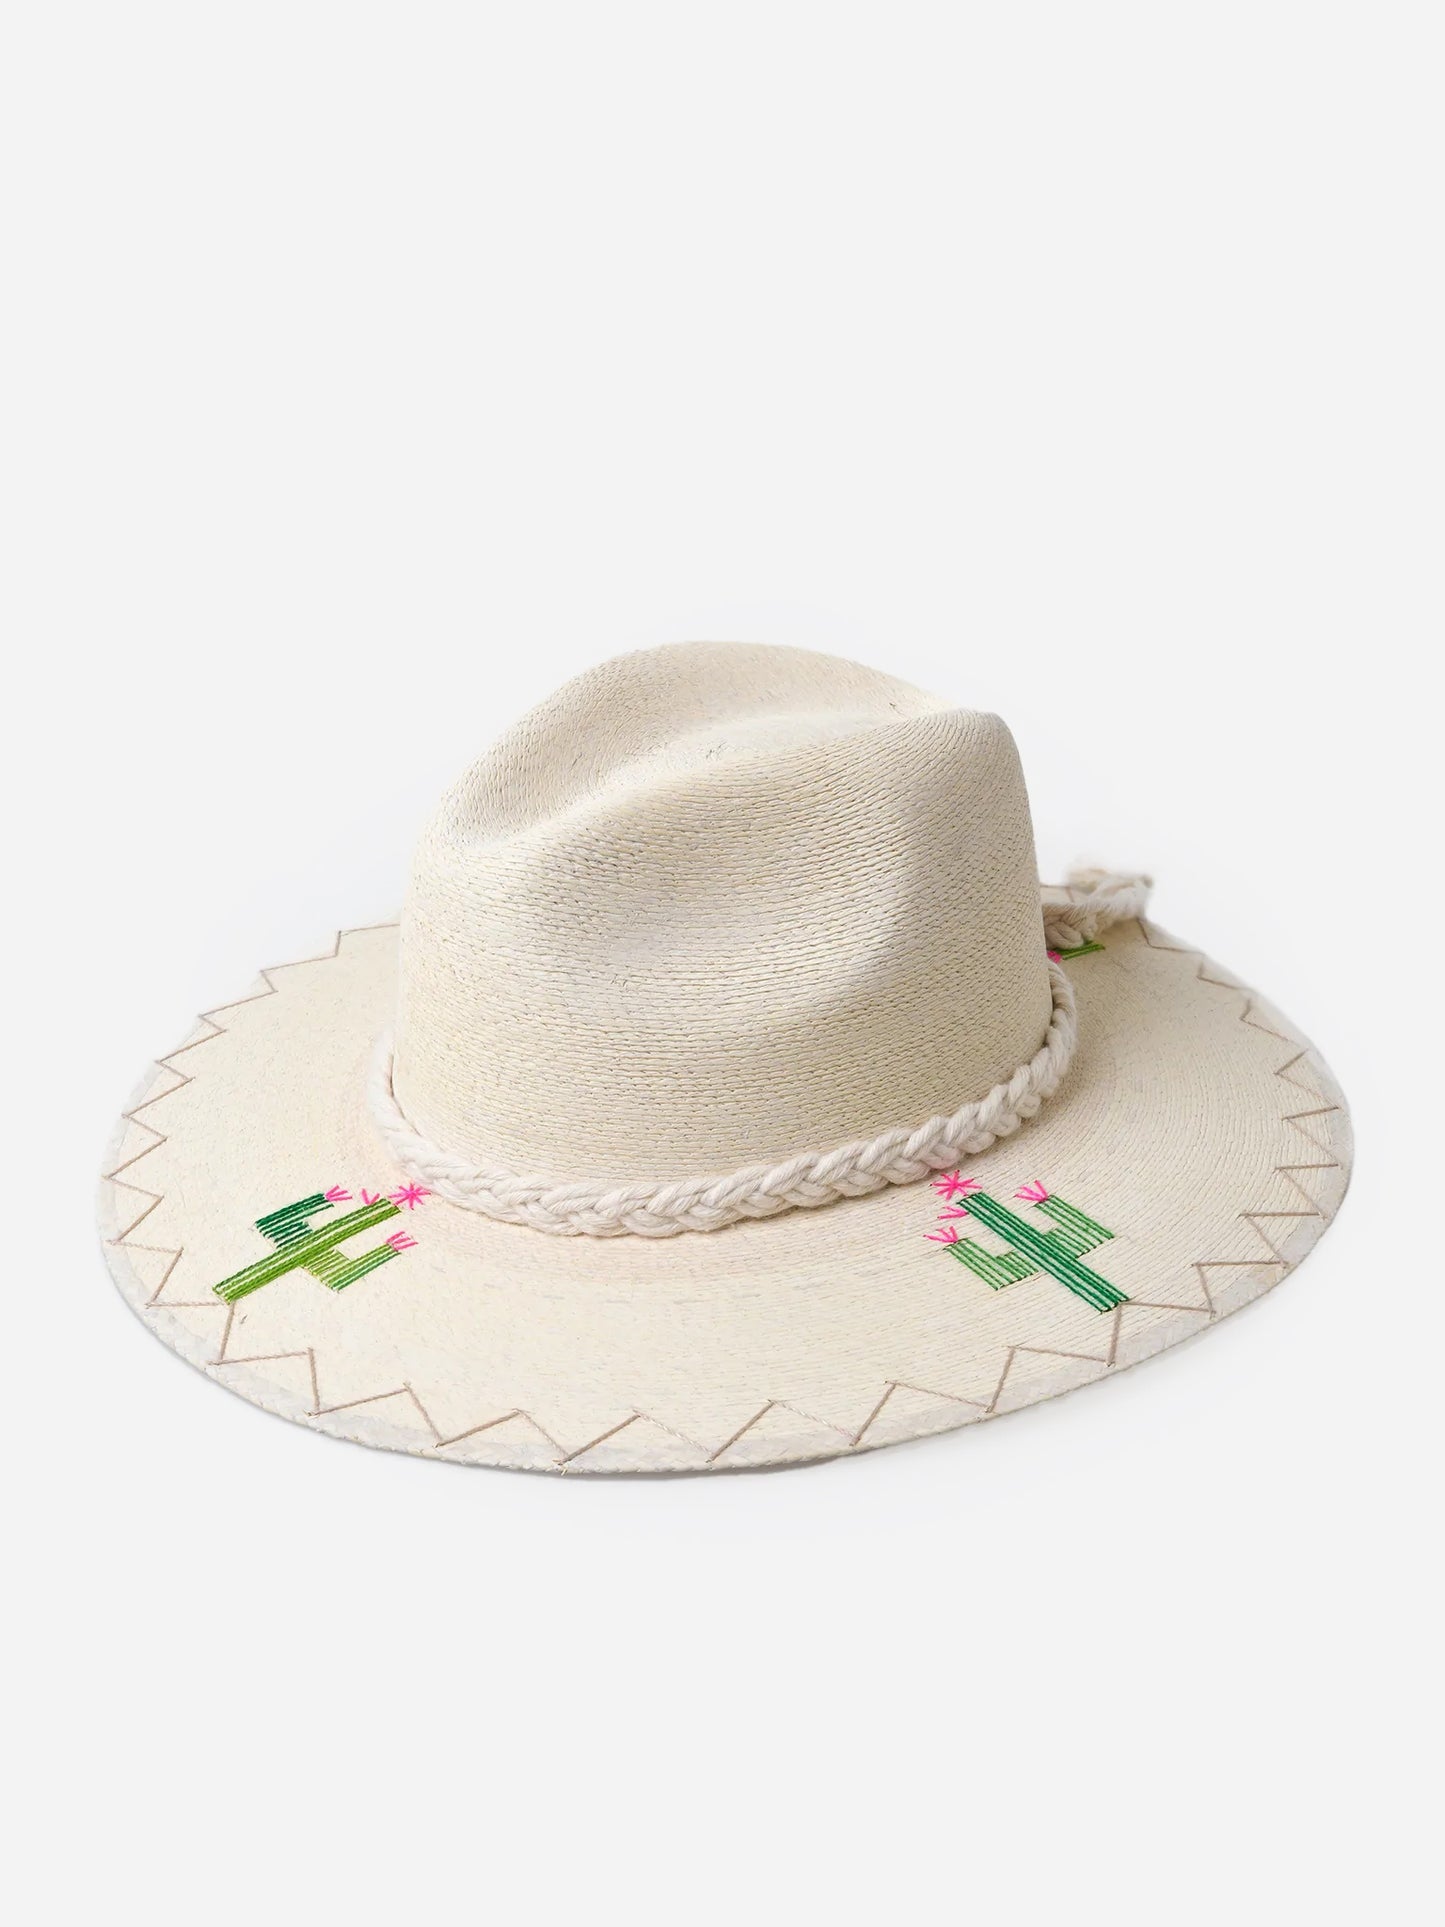 Corazon Playero Women's Santa Maria Hat